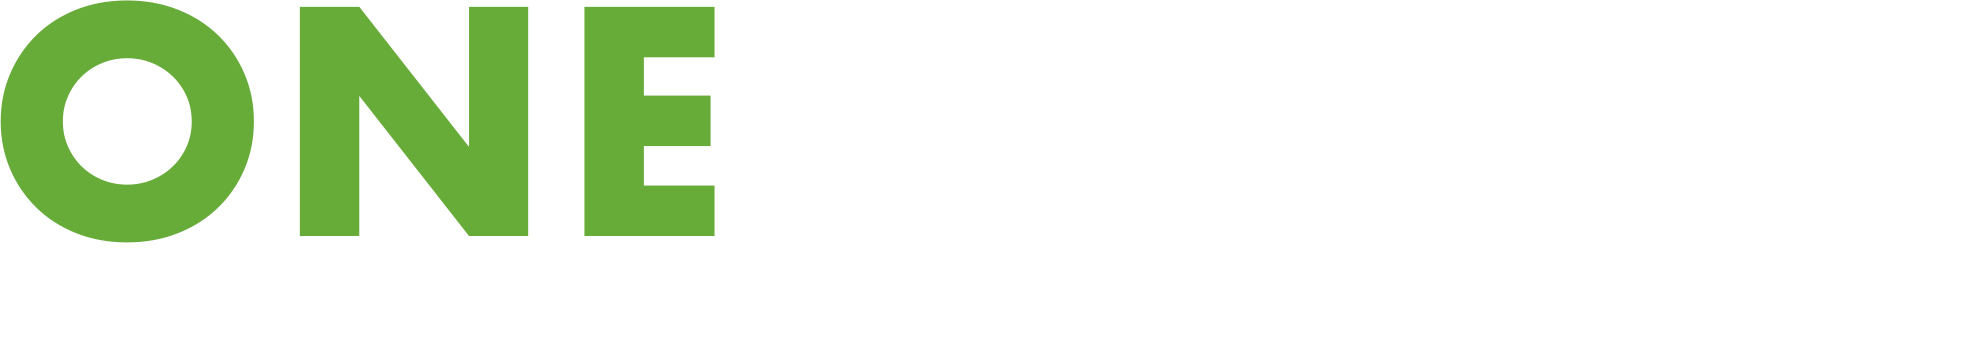 ONEELEVEN web design logo